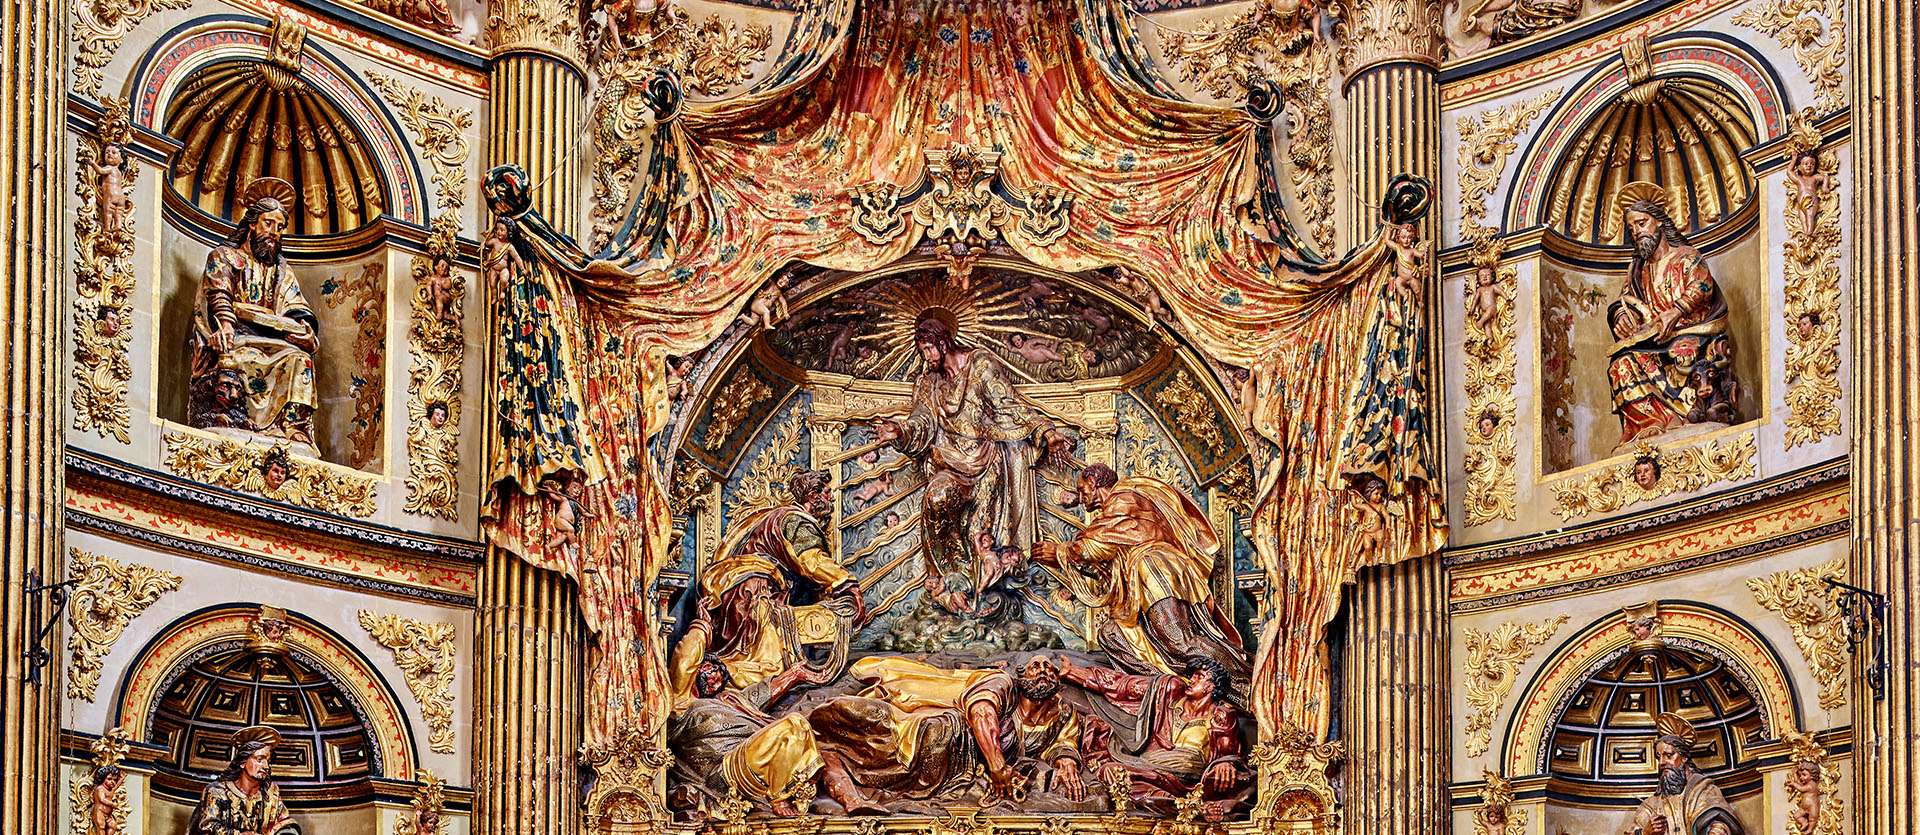 Particolare della pianta della Cappella del Salvatore. Diego de Siloé.